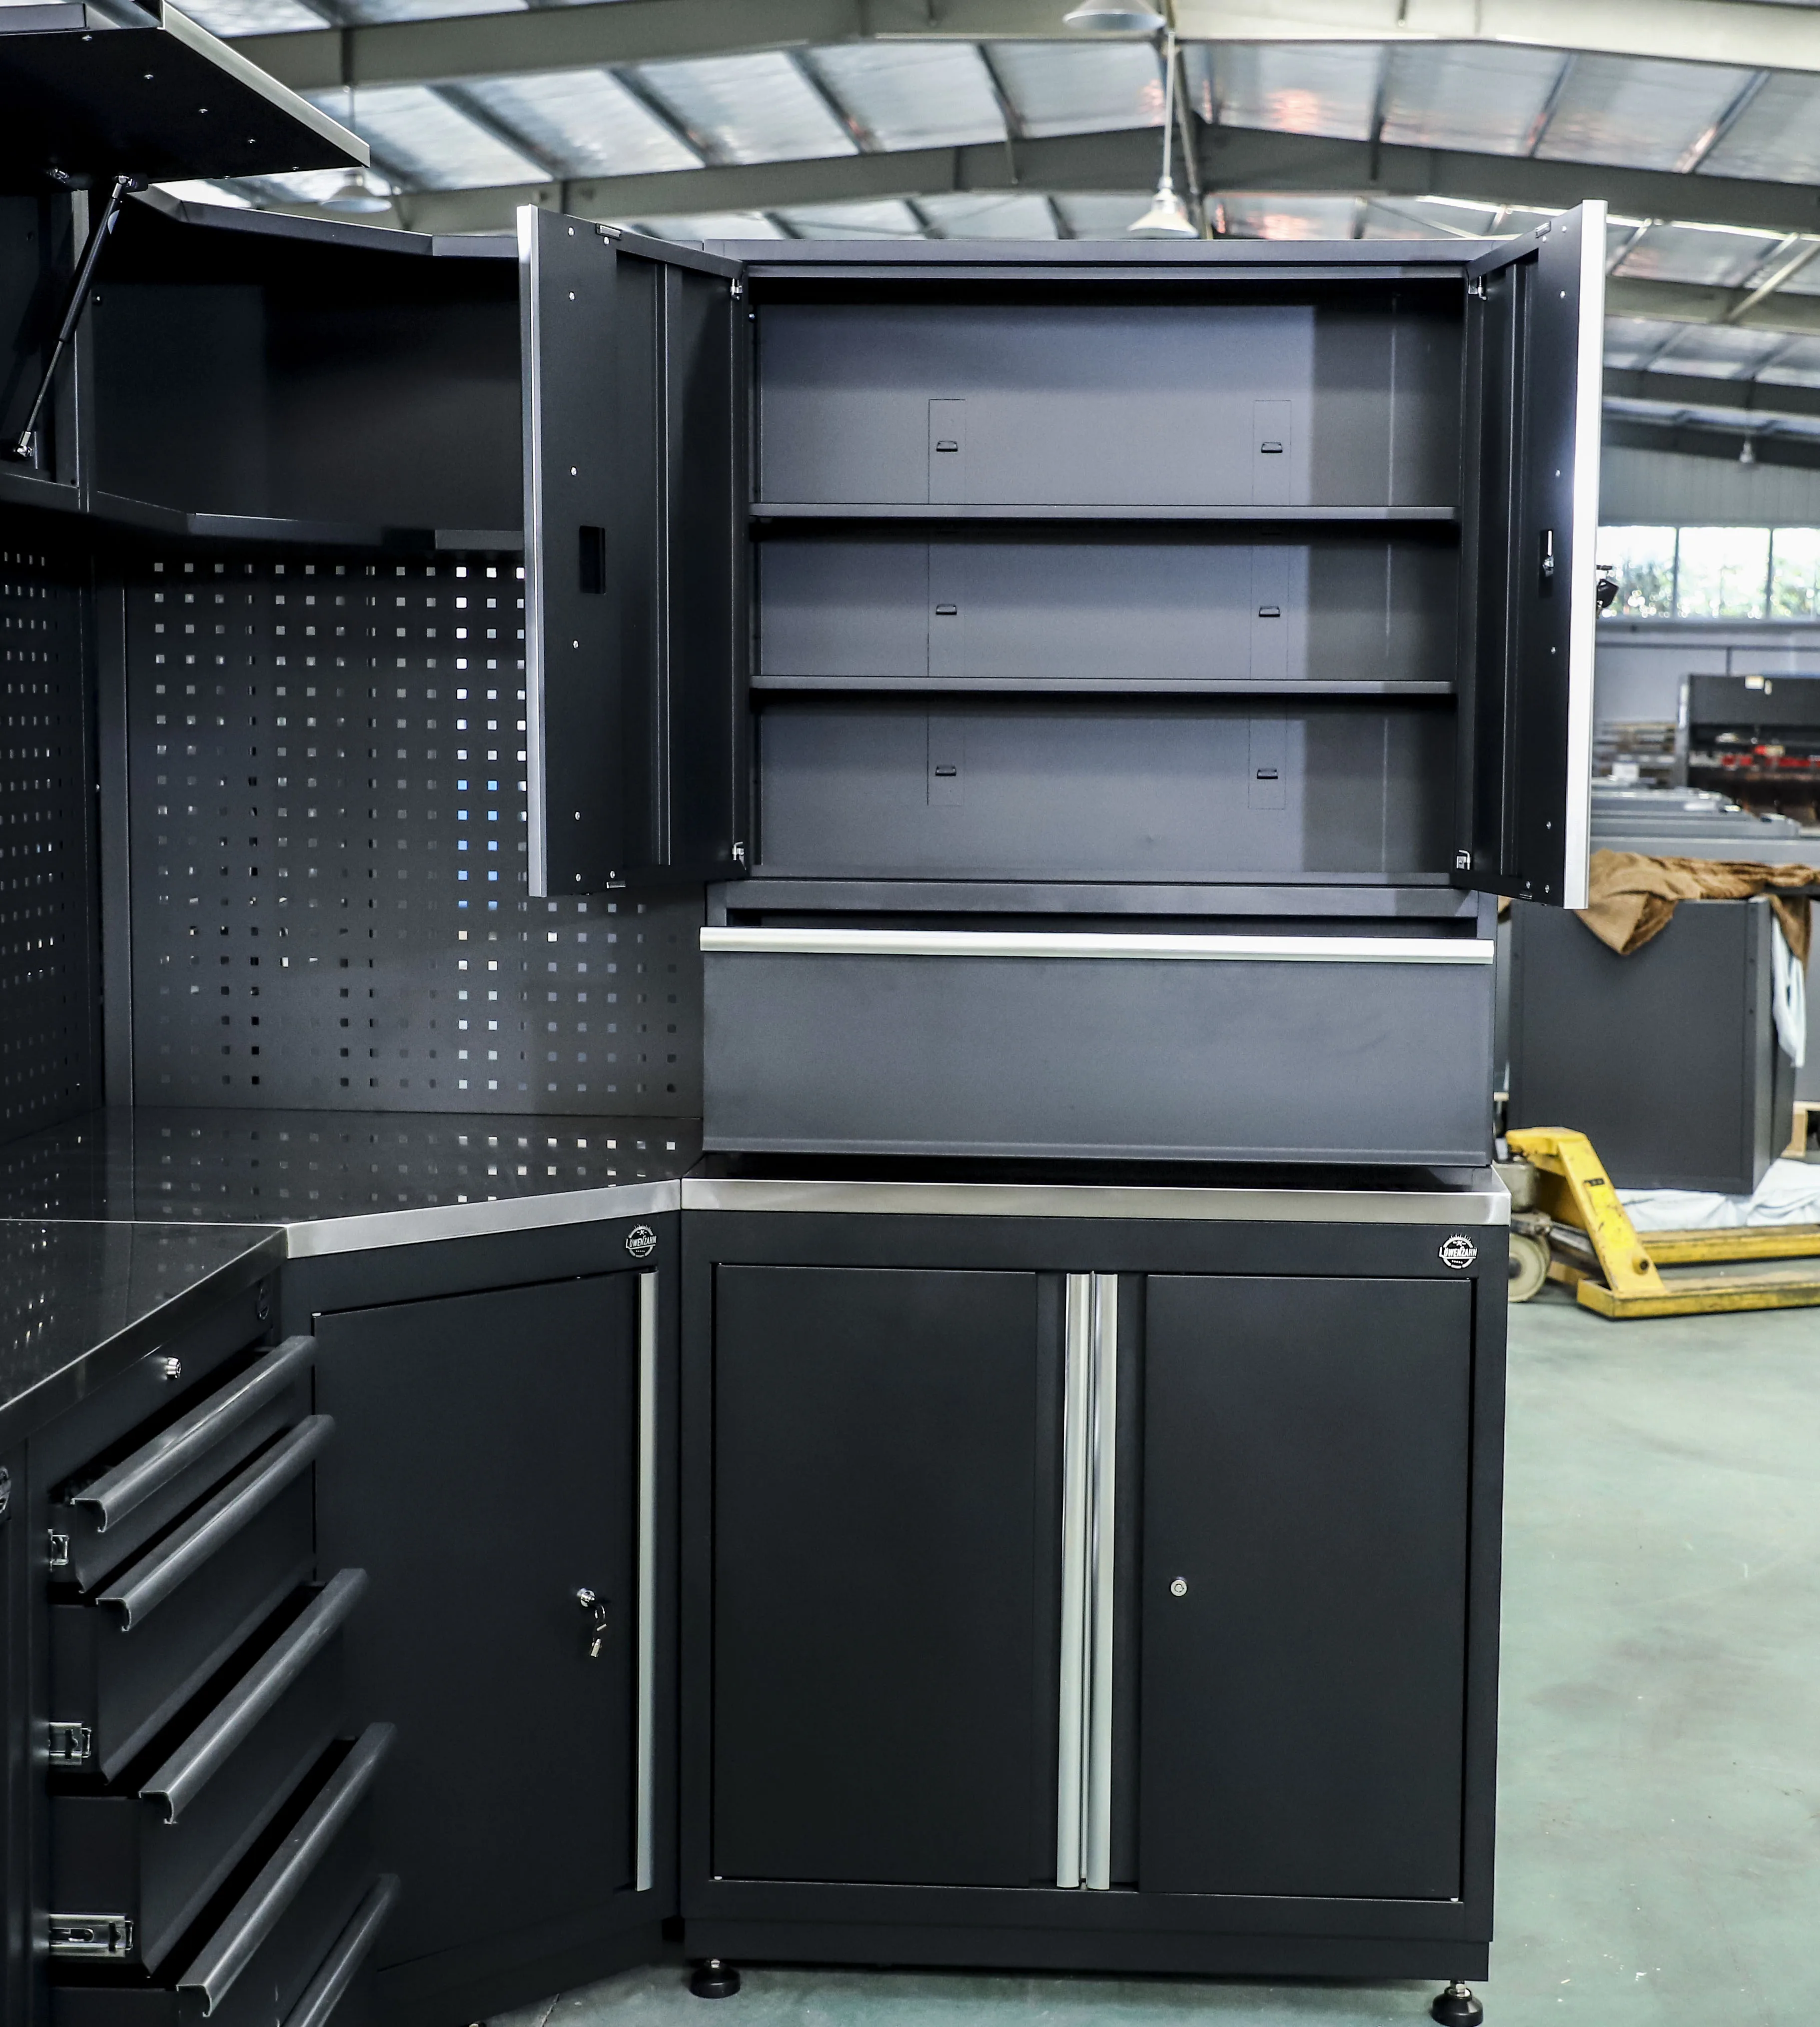 Heavy duty metal multi-function Black Garage system combination workbench & drawers cabinet trolley